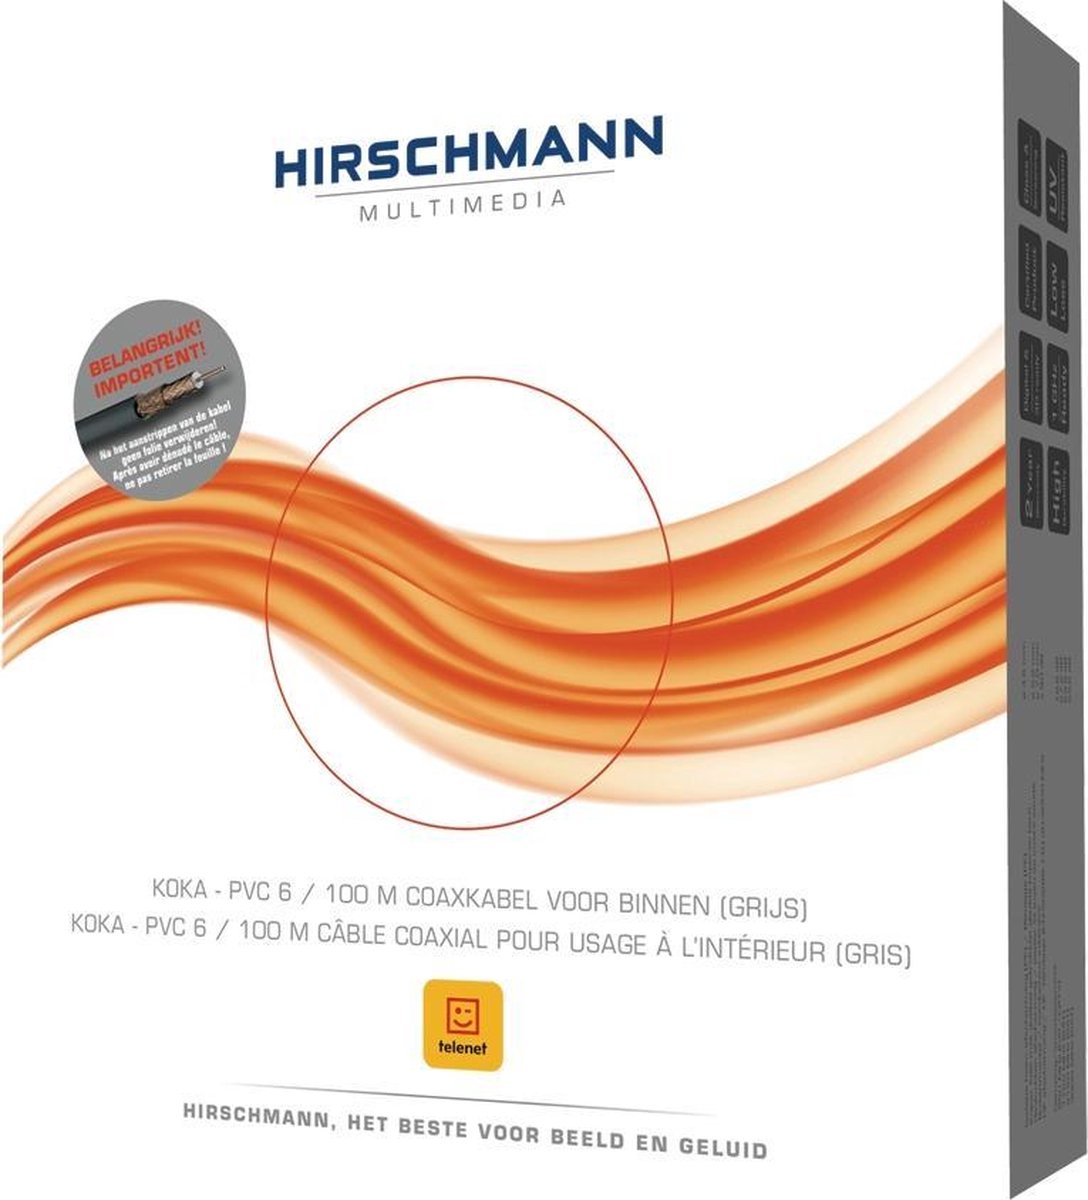 Hirschmann KOKA PVC 6 coax kabel | bol.com